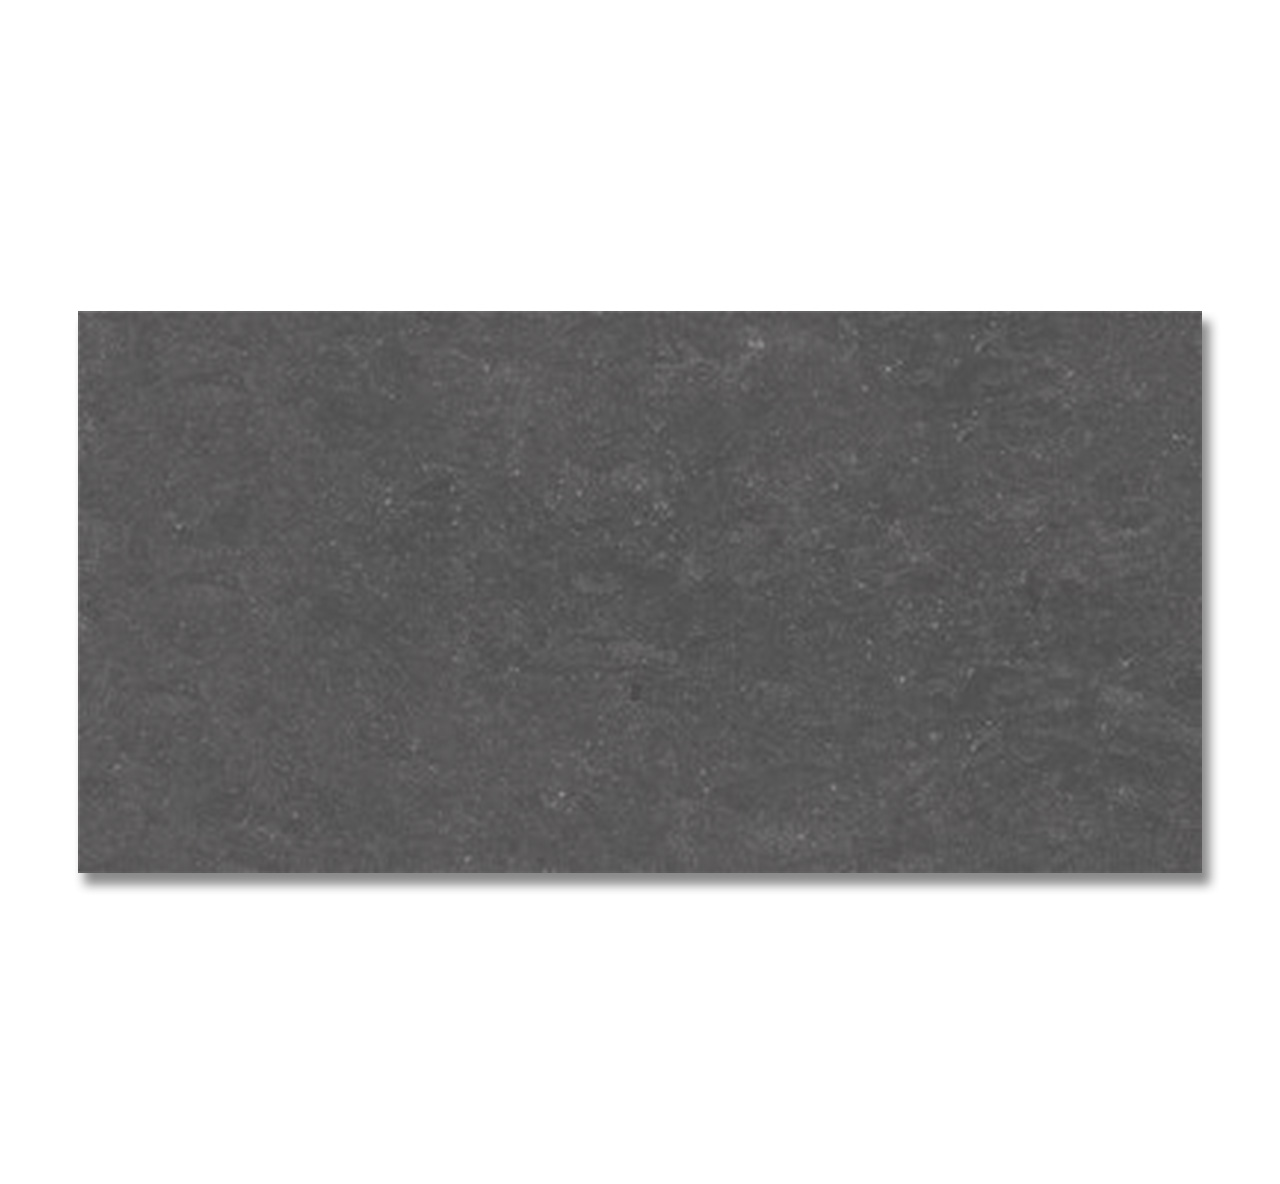 Lounge Dark Anthracite Polished Stone Effect Tiles (30cm x 60cm)